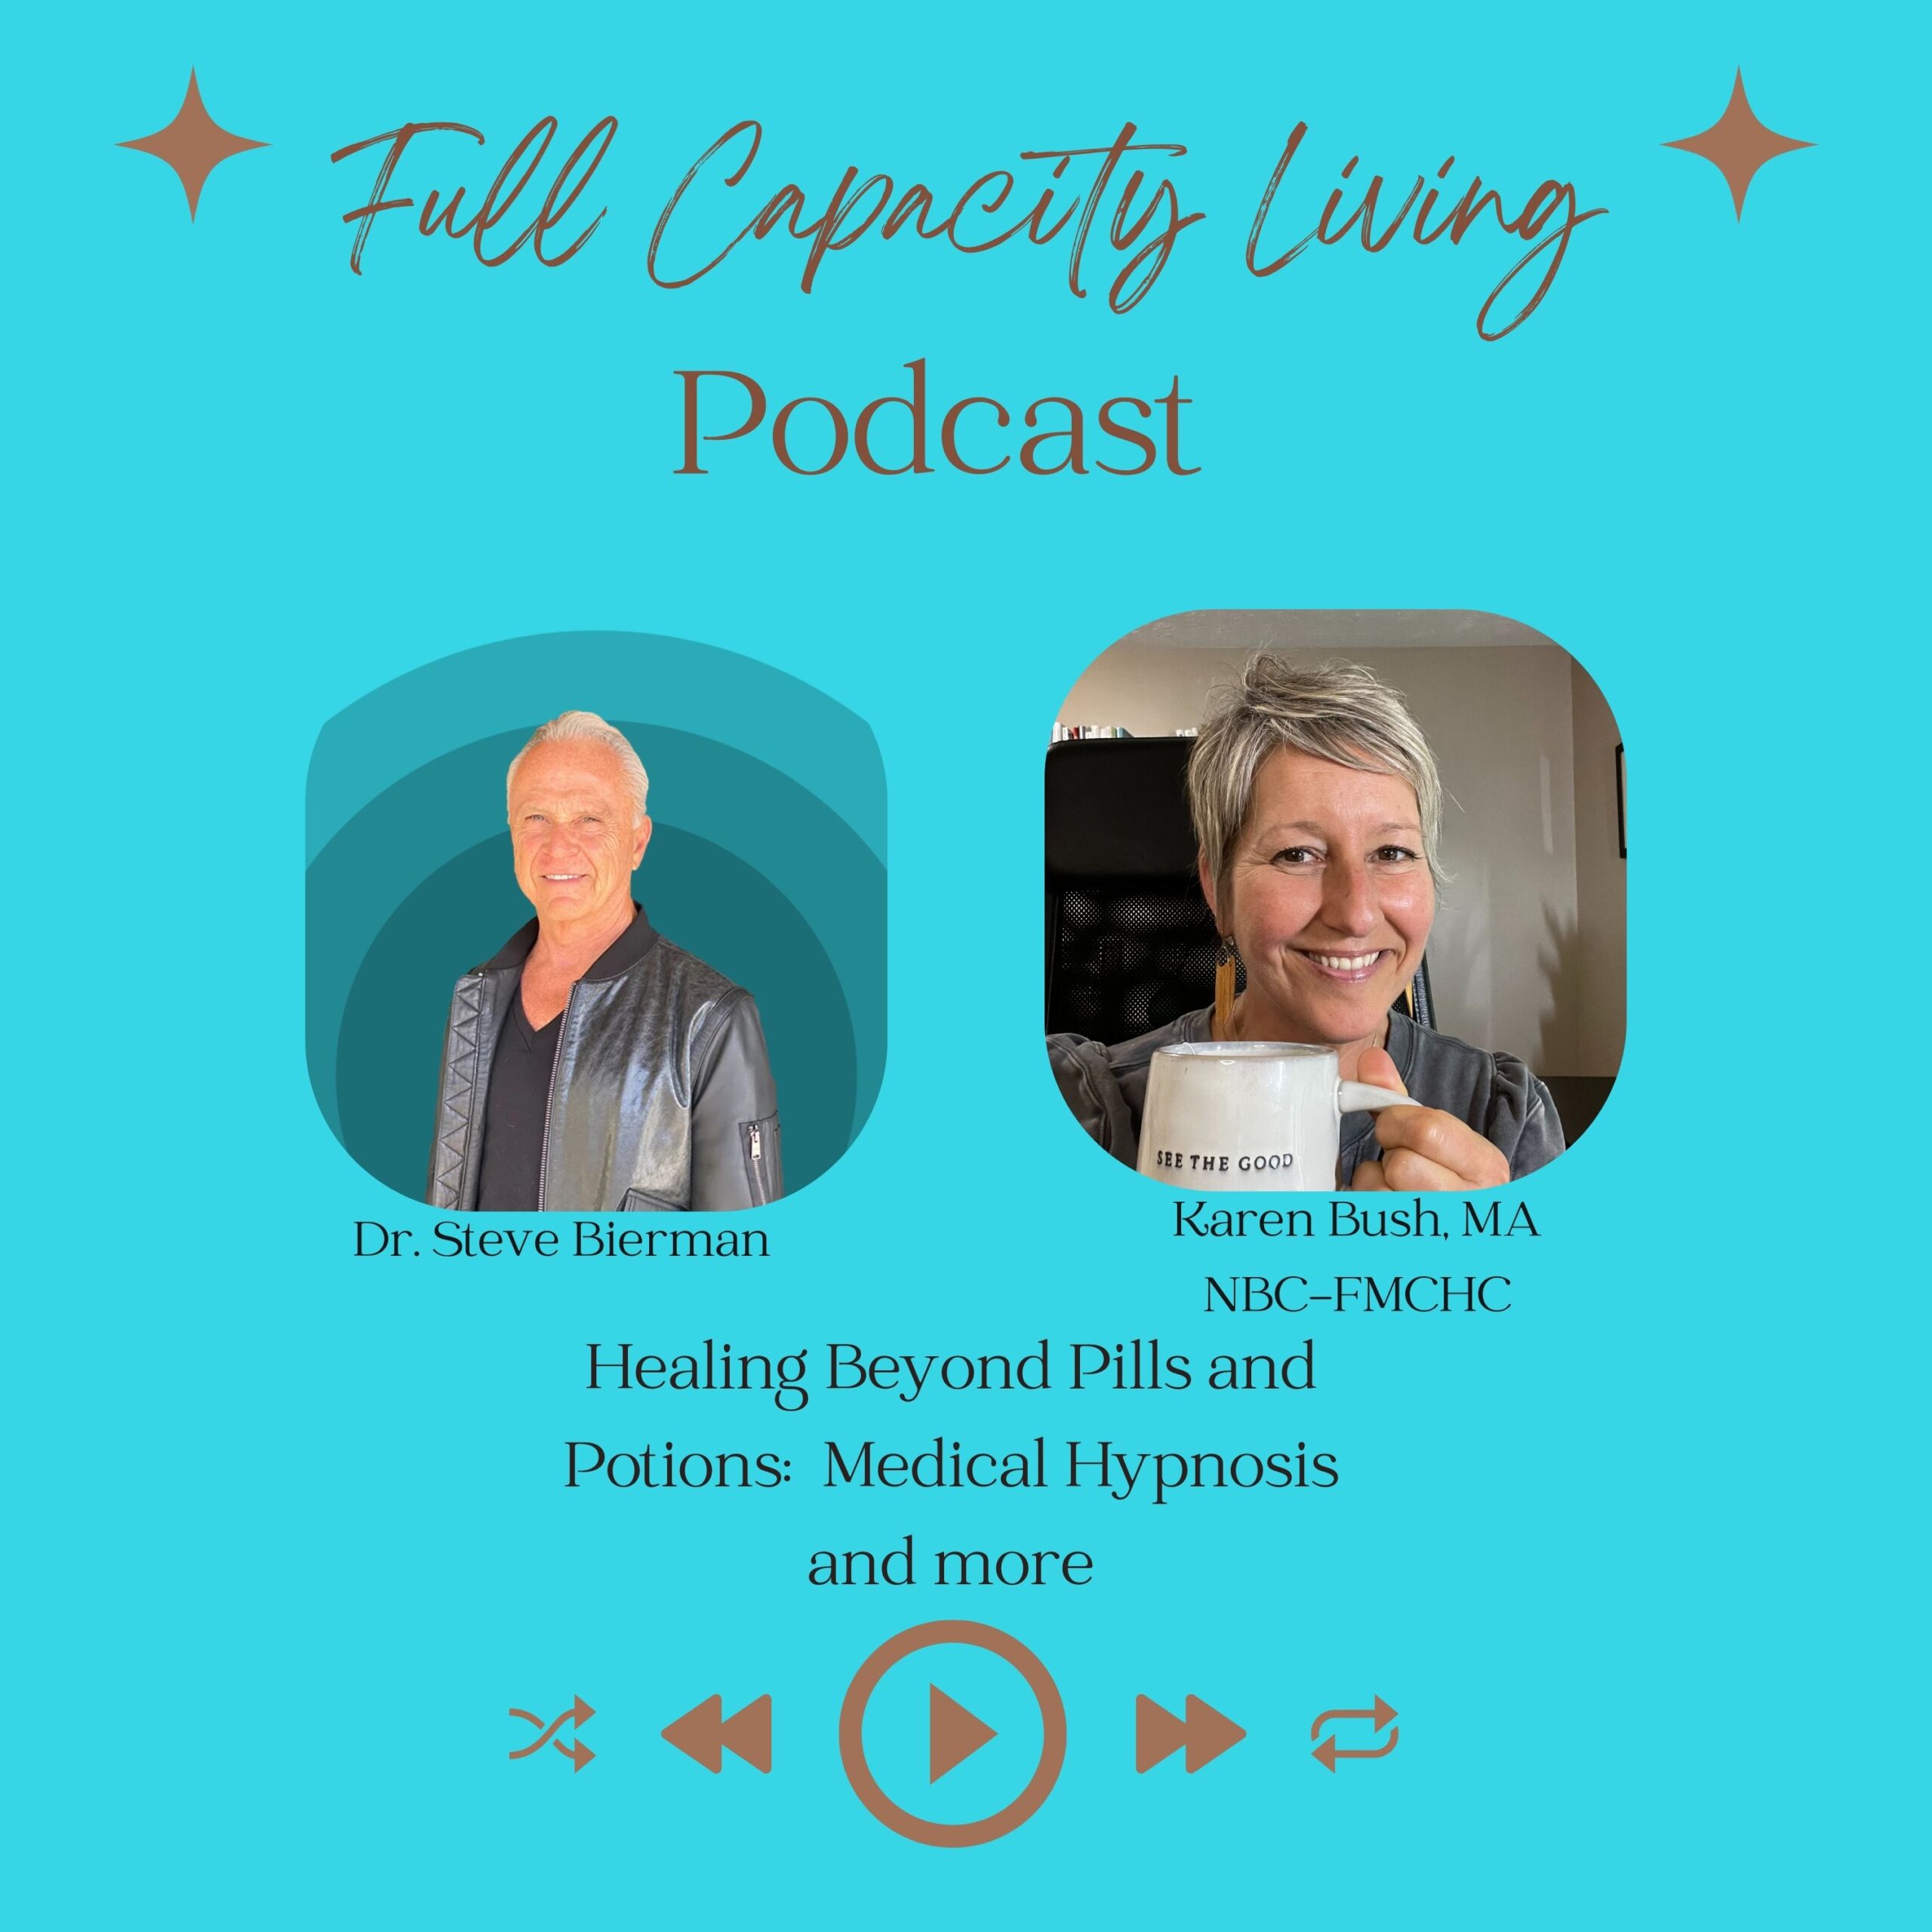 Dr. Steve Bierman: Healing Beyond Pills and Potions – Medical Hypnosis